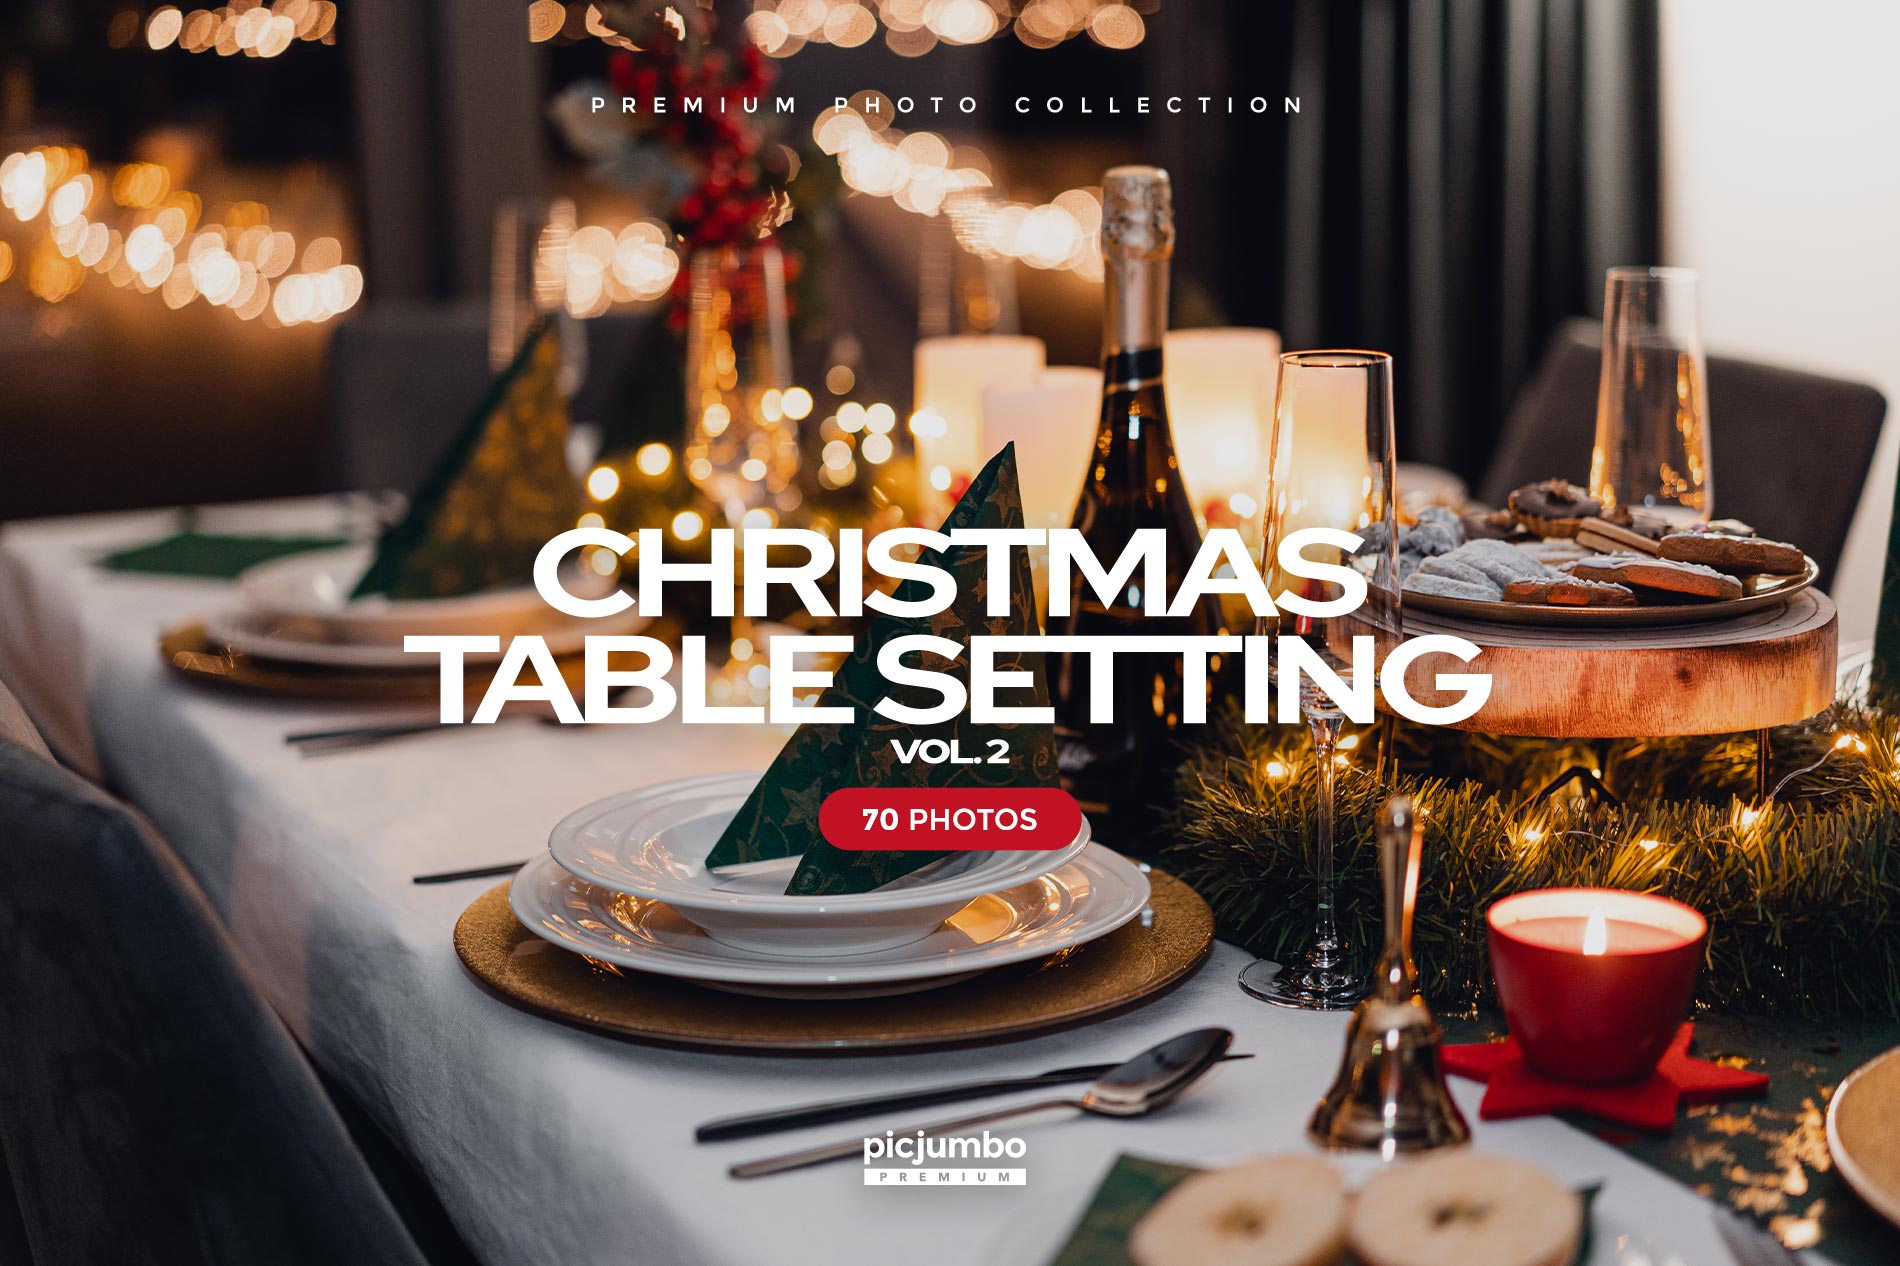 Christmas Table Setting Vol. 2 Stock Photo Collection